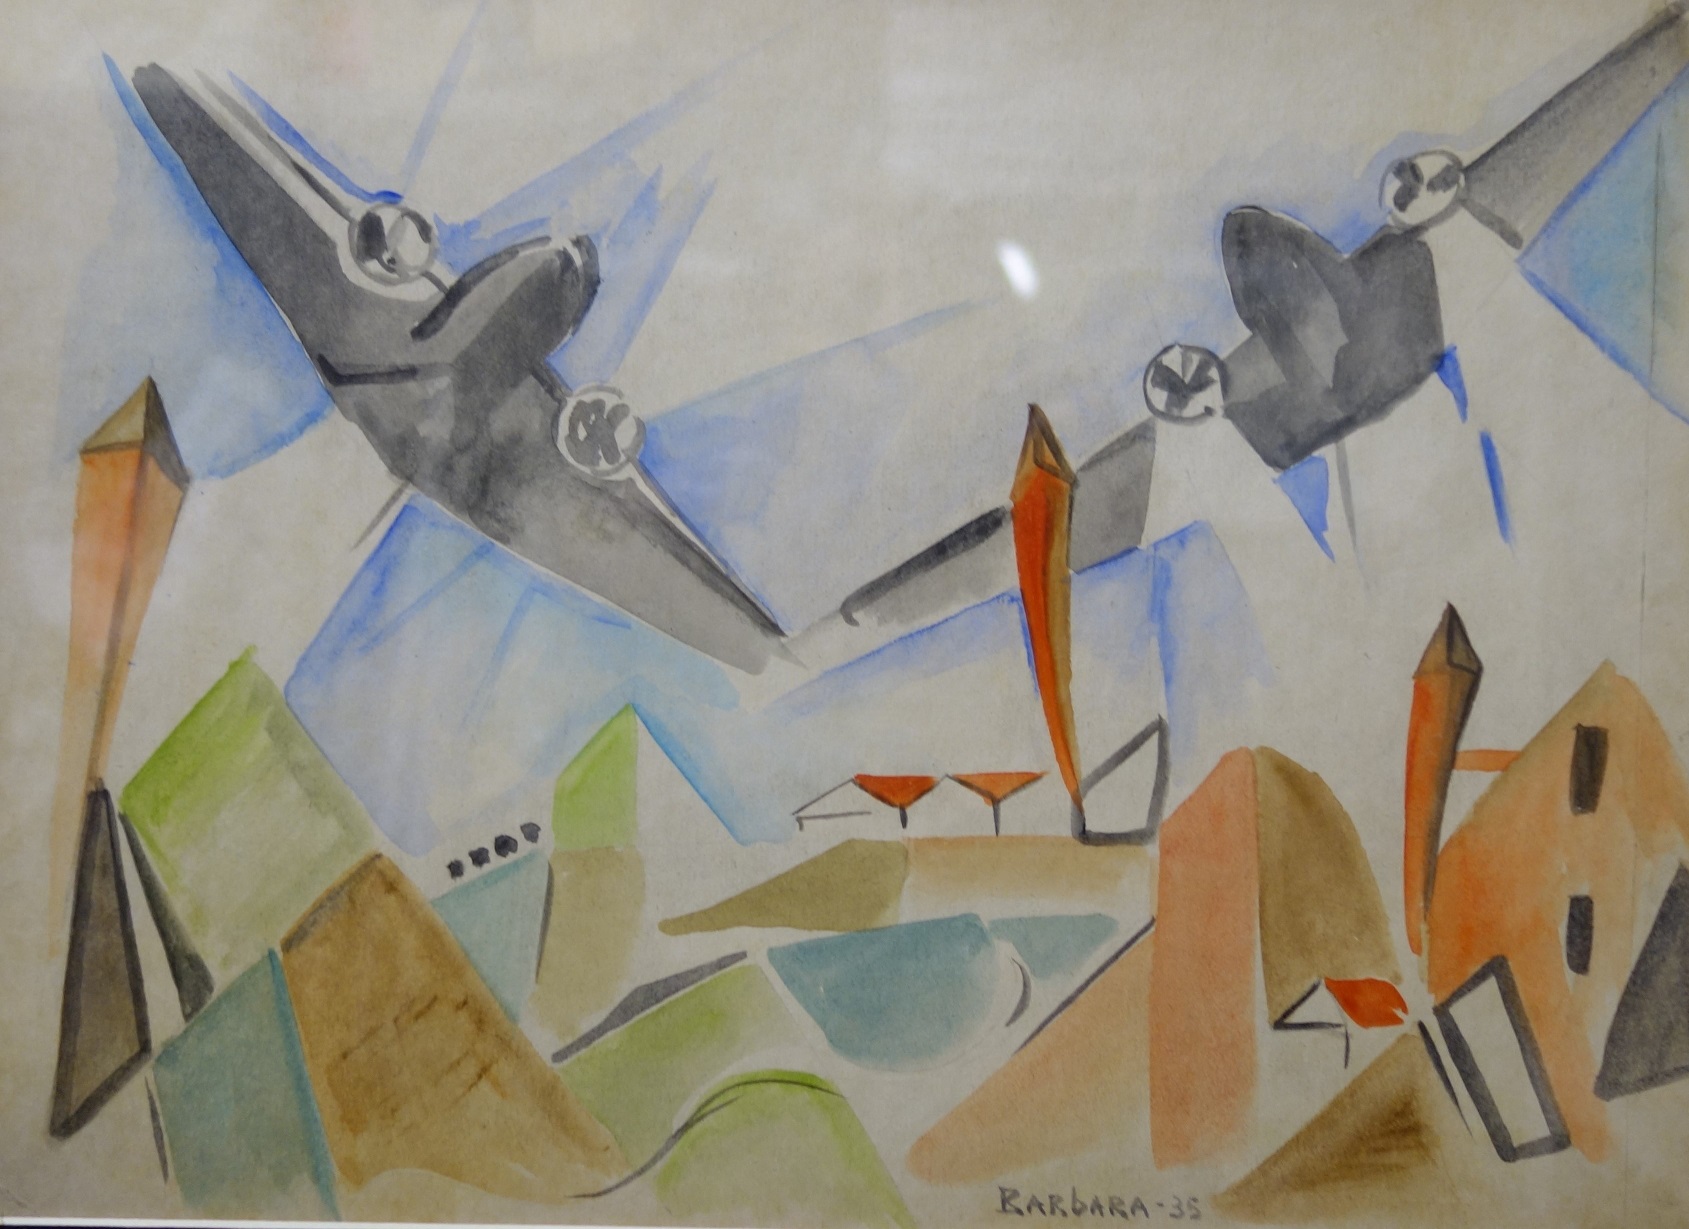 Barbara, Biglieri, Italian painting, Futurism, planes